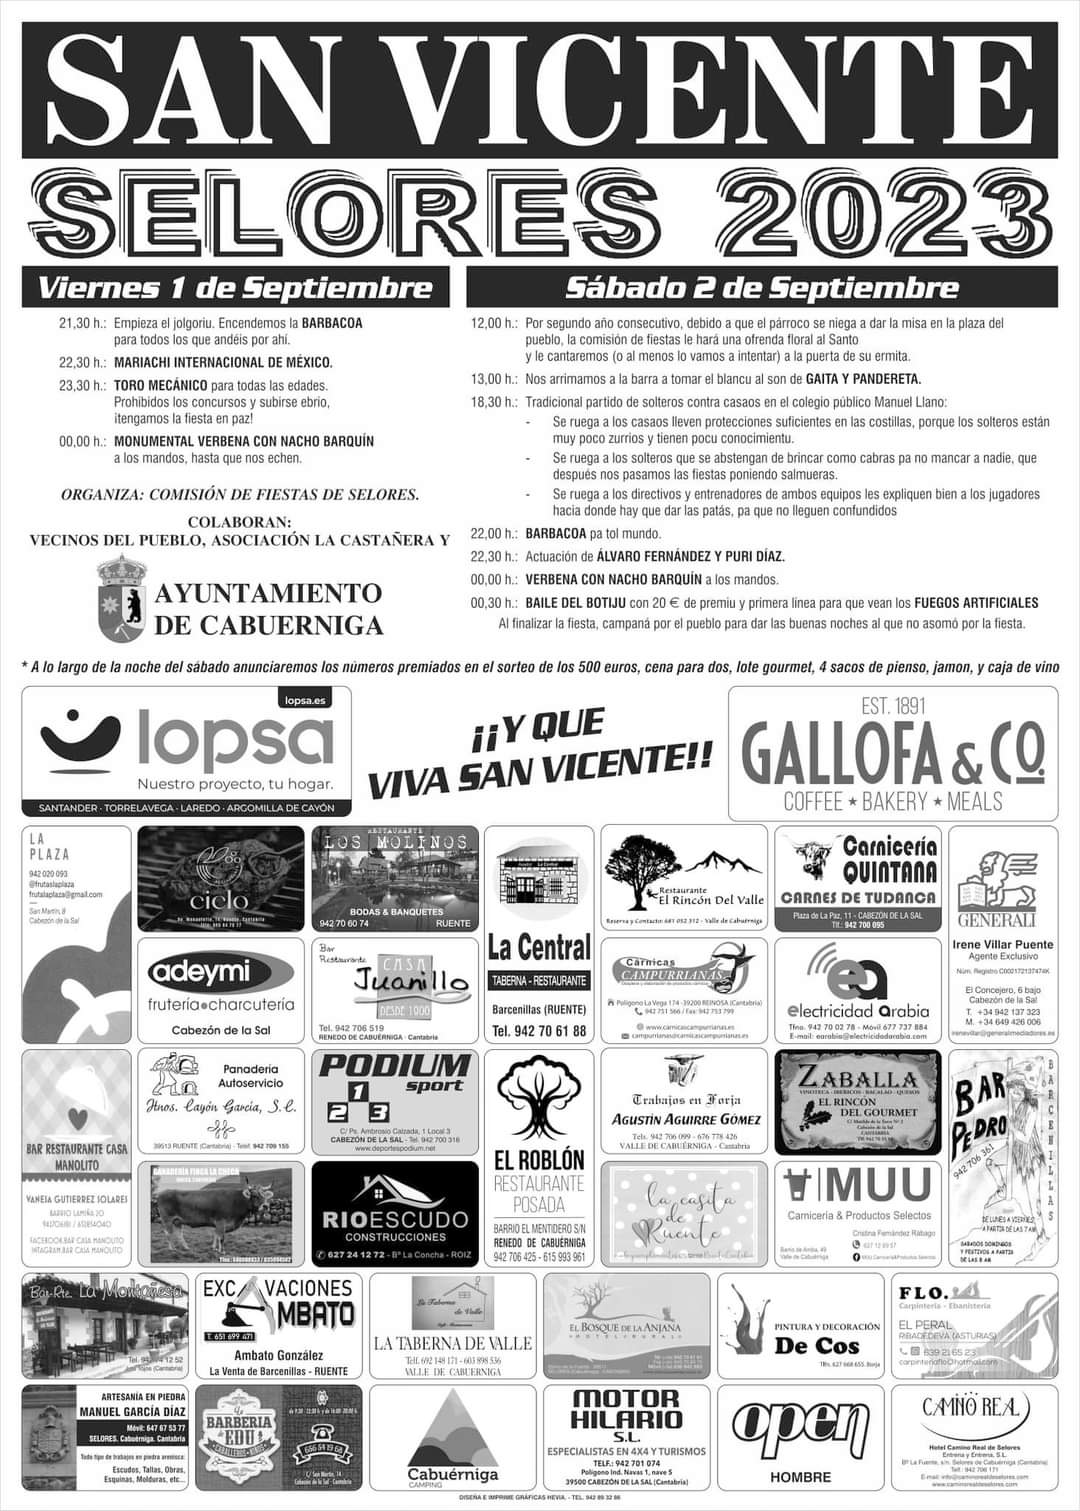 San Vicente Selores 2023